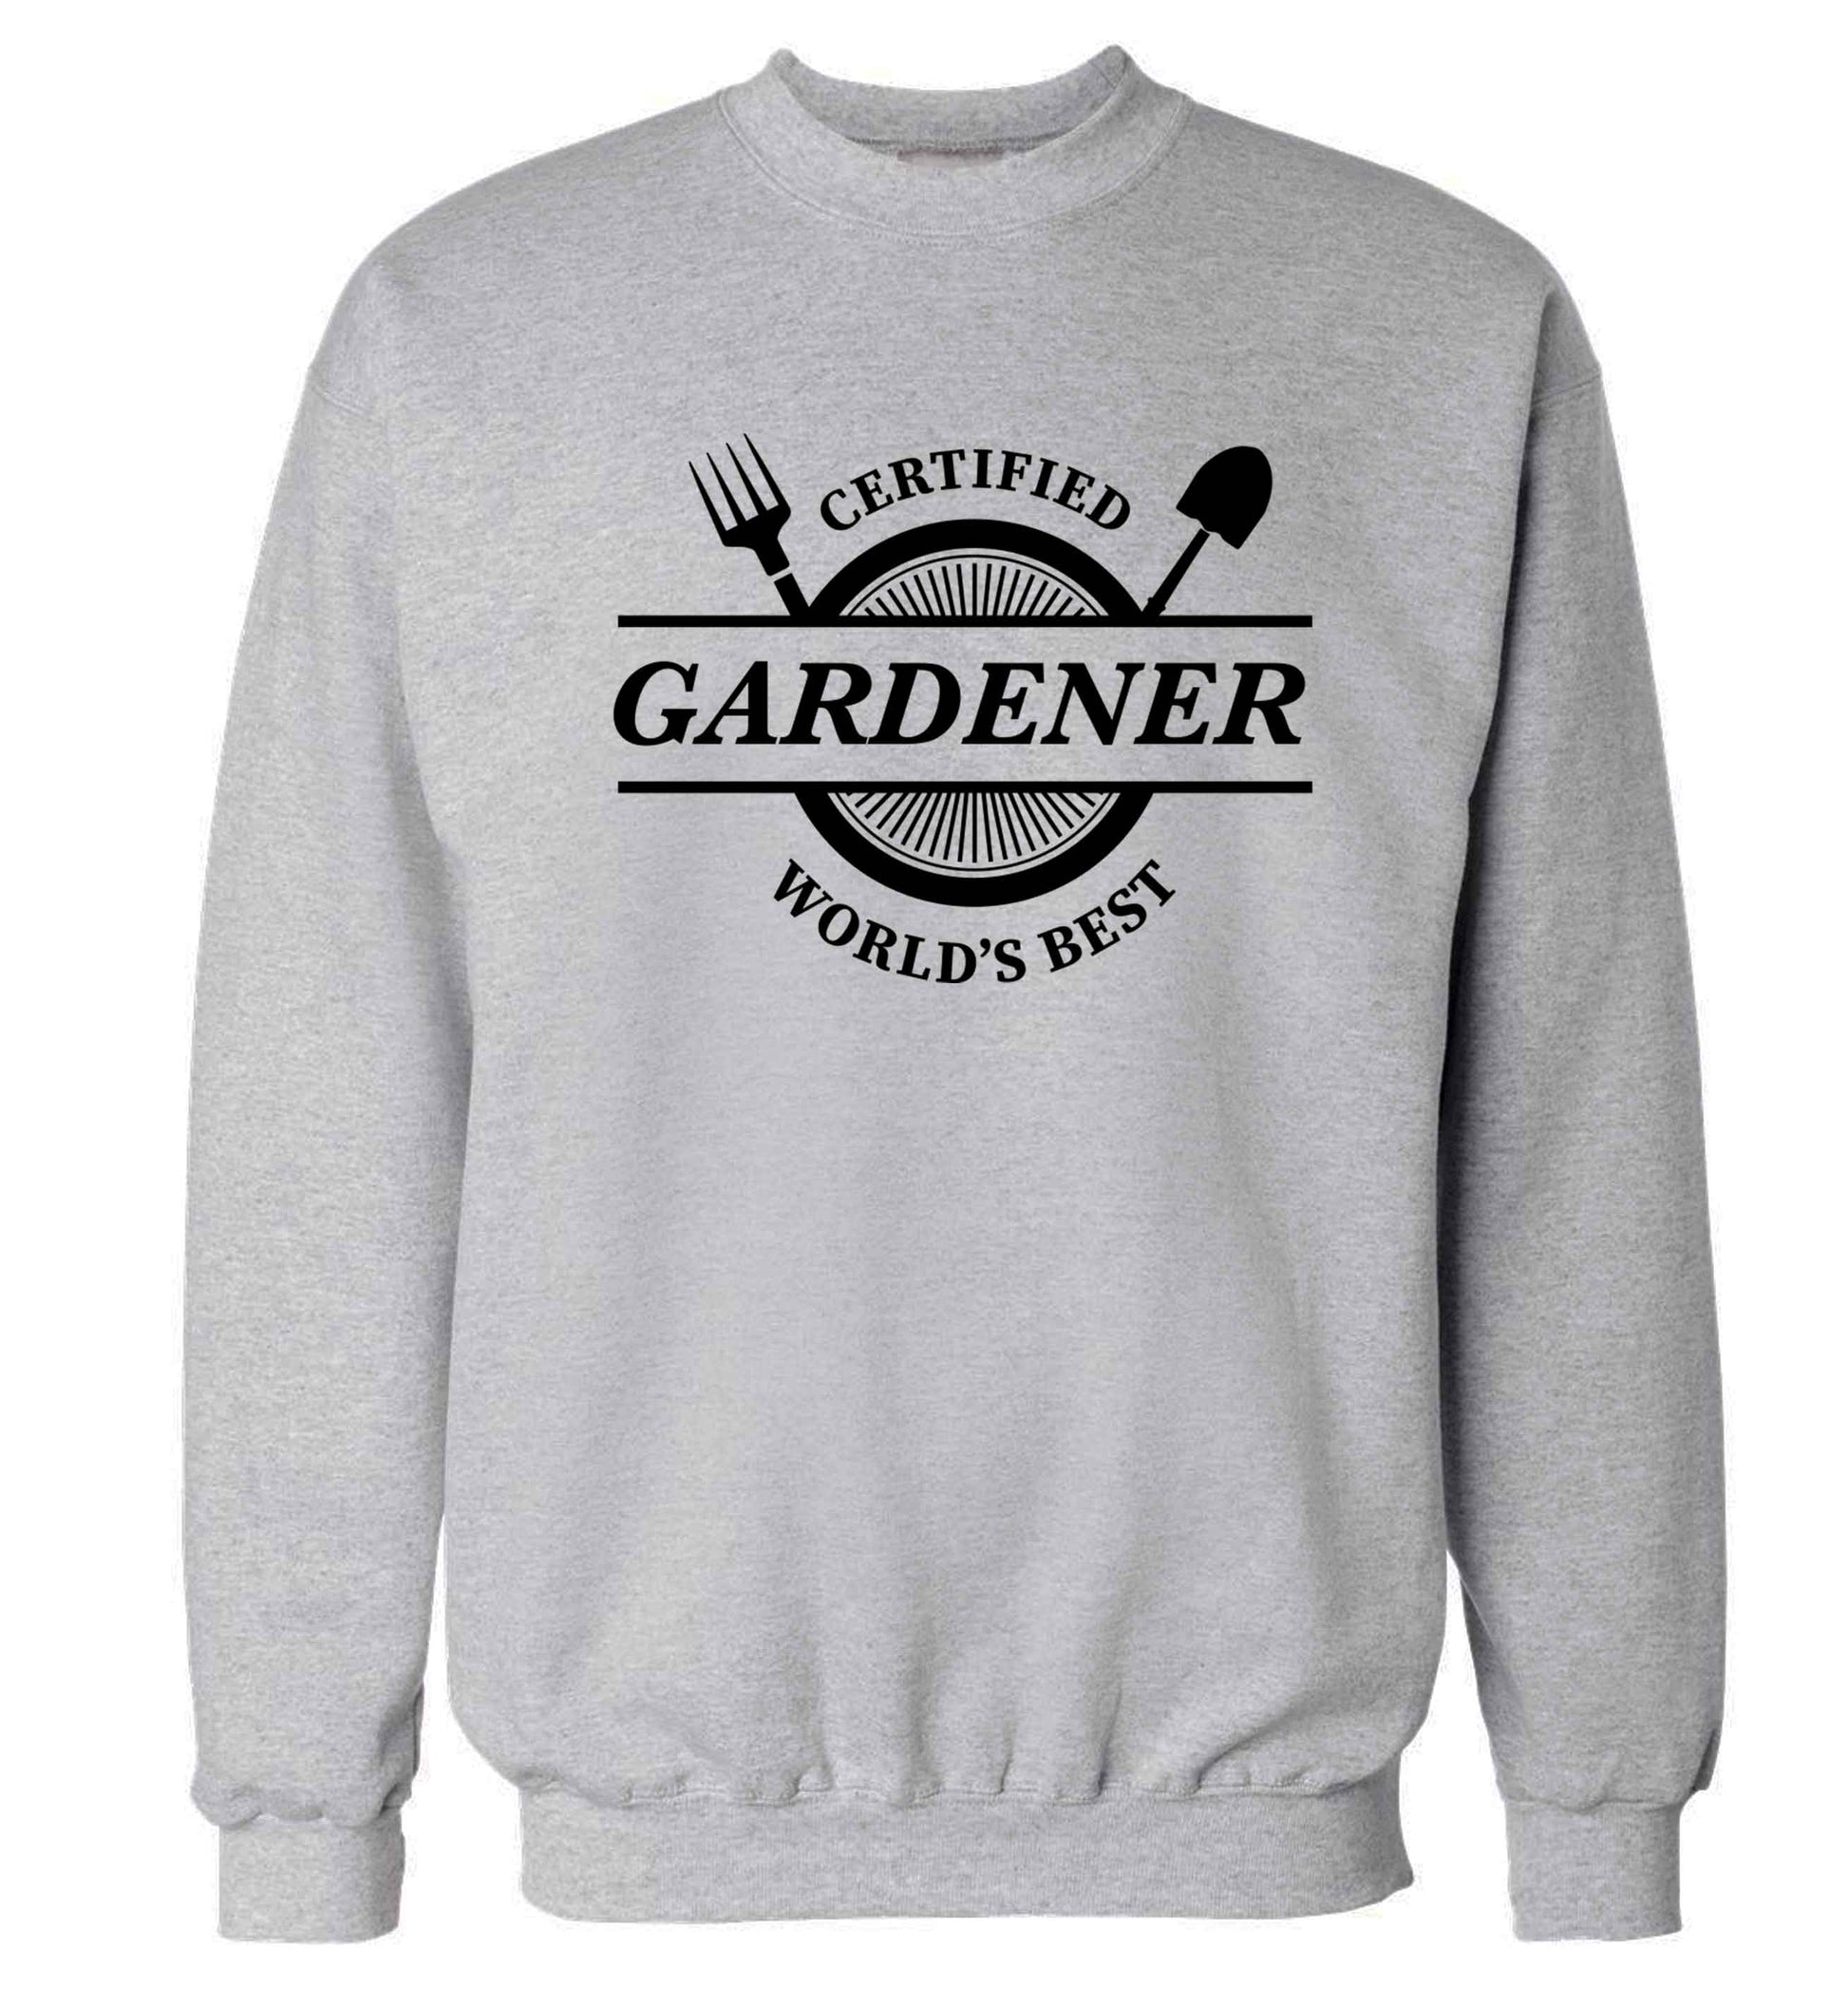 Certified gardener worlds best Adult's unisex grey Sweater 2XL